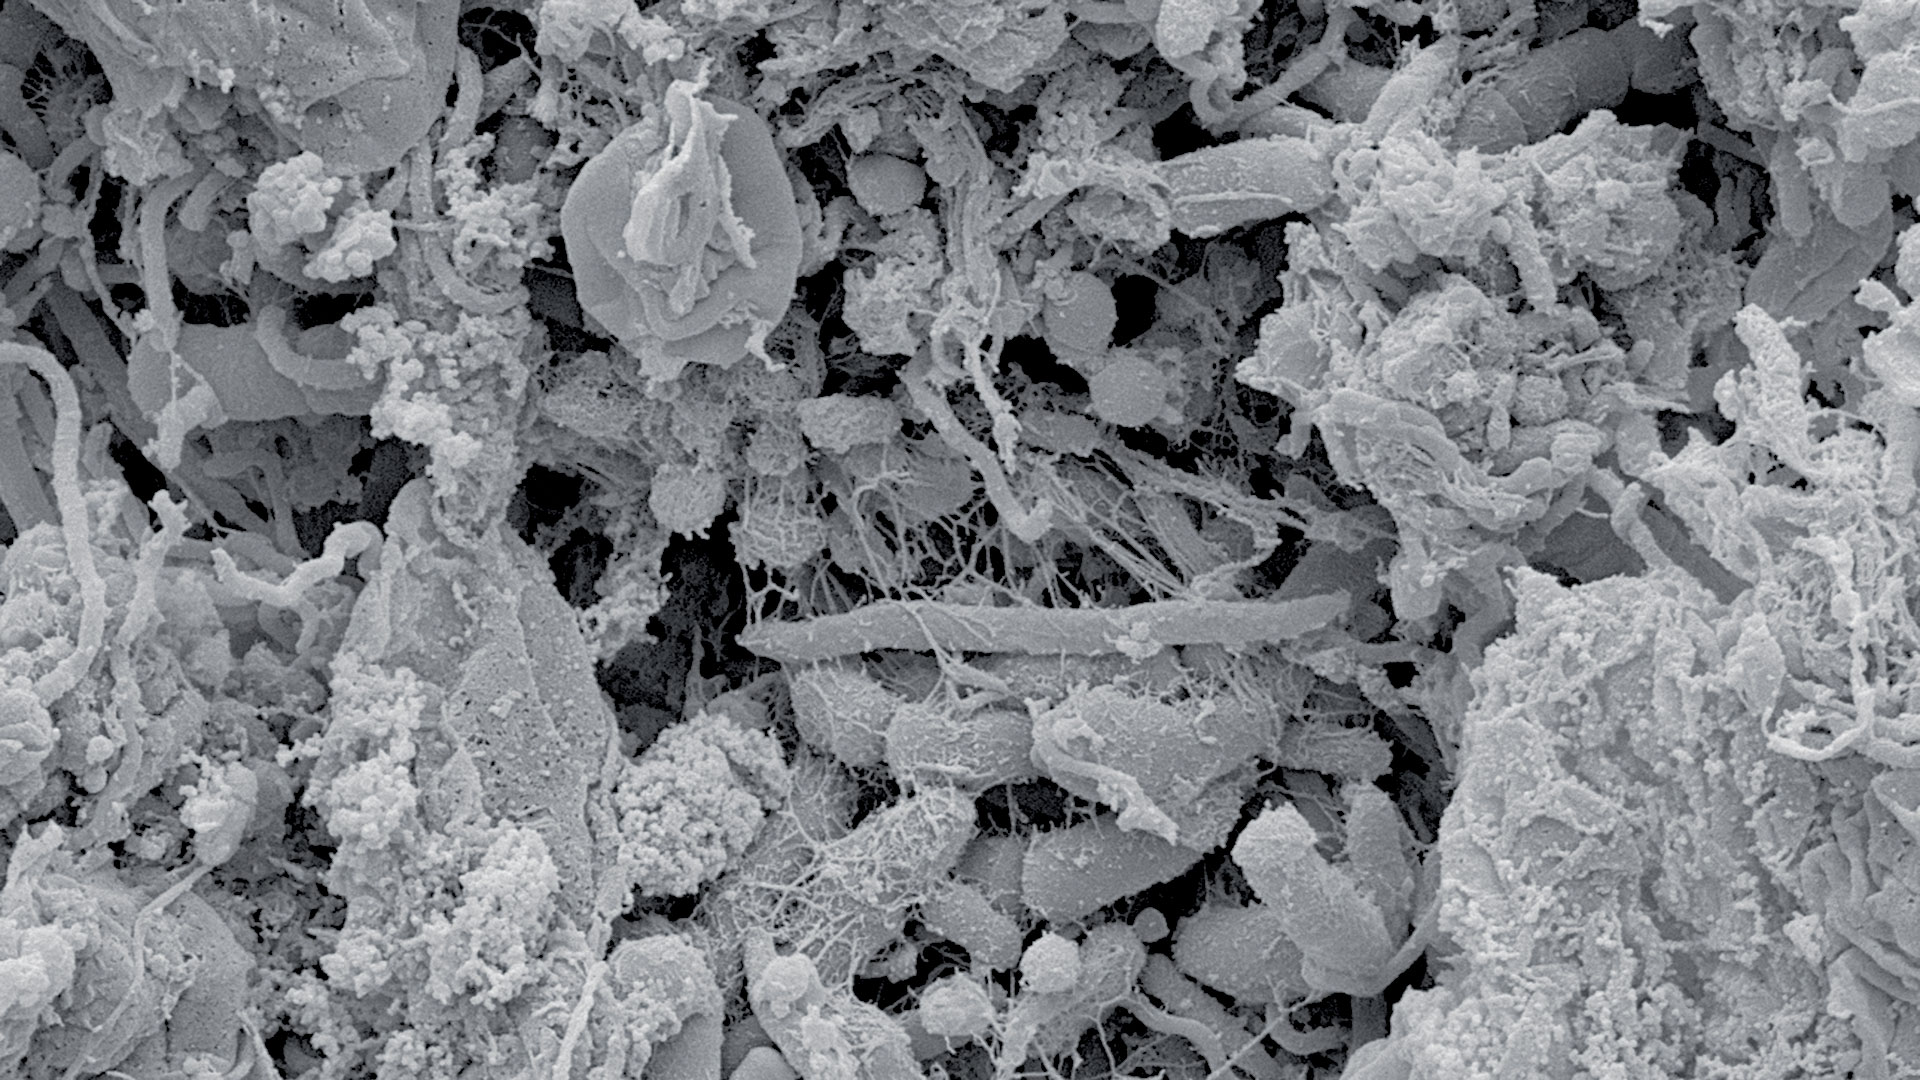 Microscopic image of oral biofilm